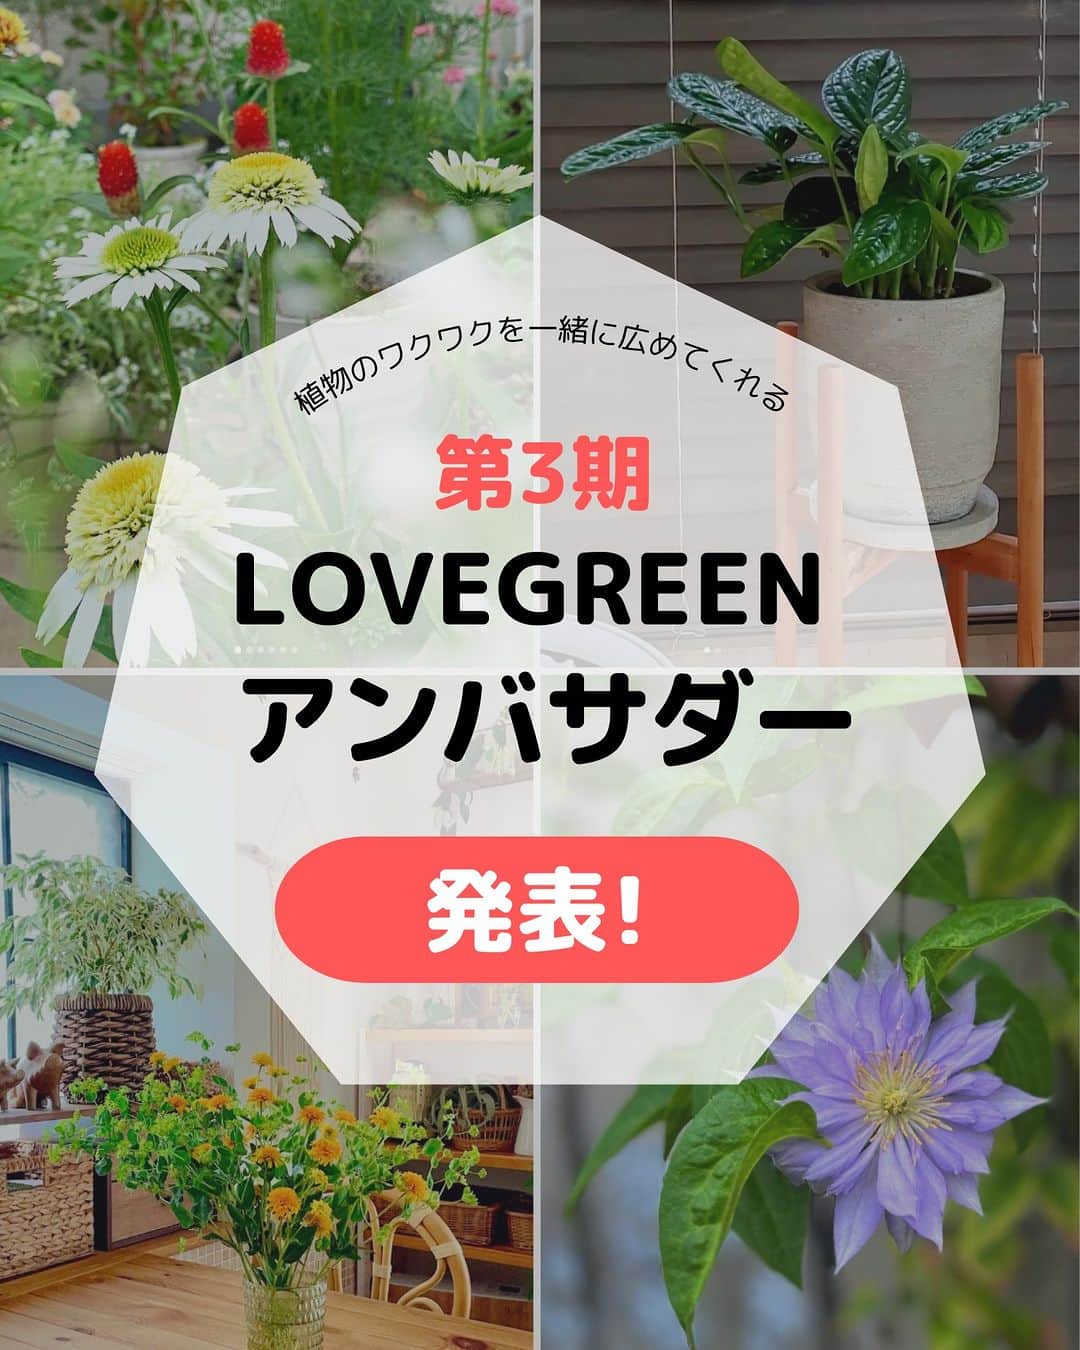 LOVEGREEN -植物と暮らしを豊かに。のインスタグラム